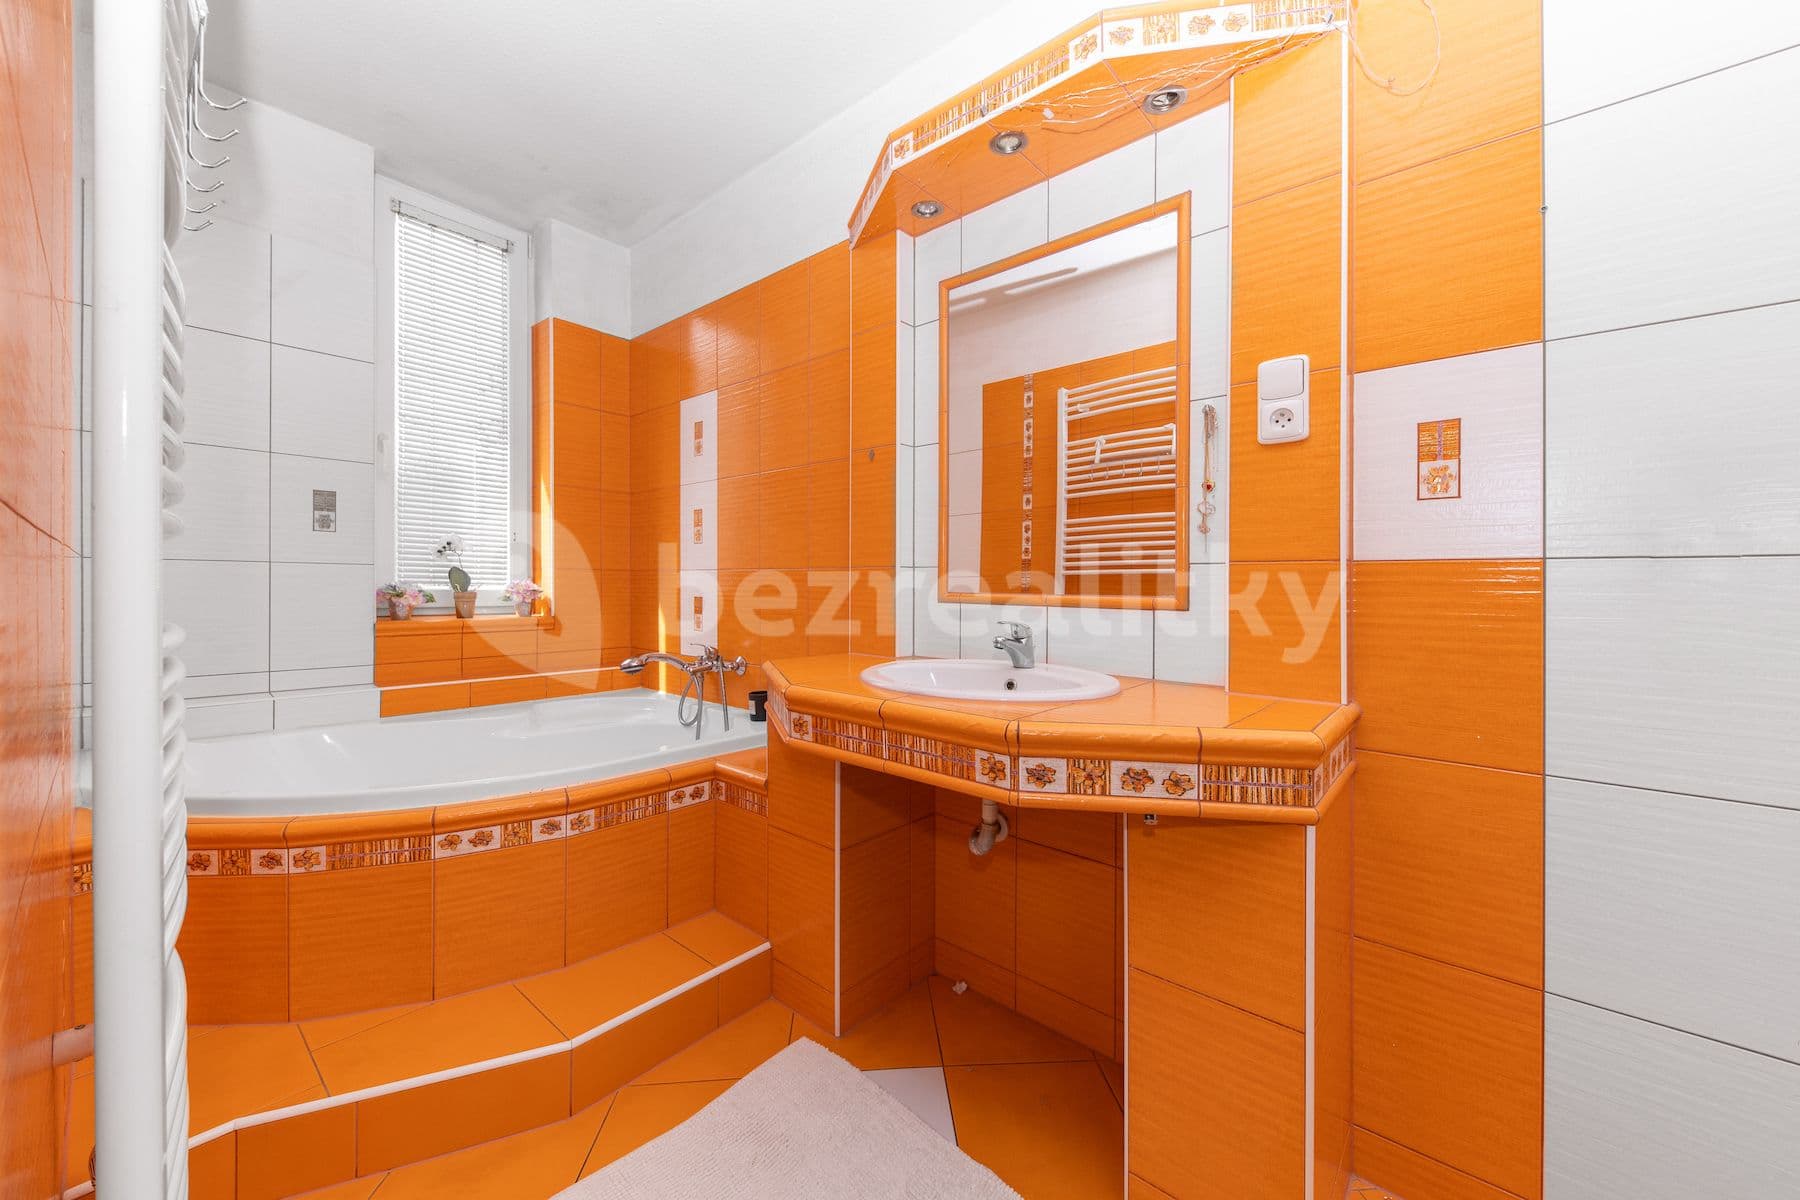 Predaj bytu 3-izbový 79 m², Arnoltice, Huzová, Olomoucký kraj